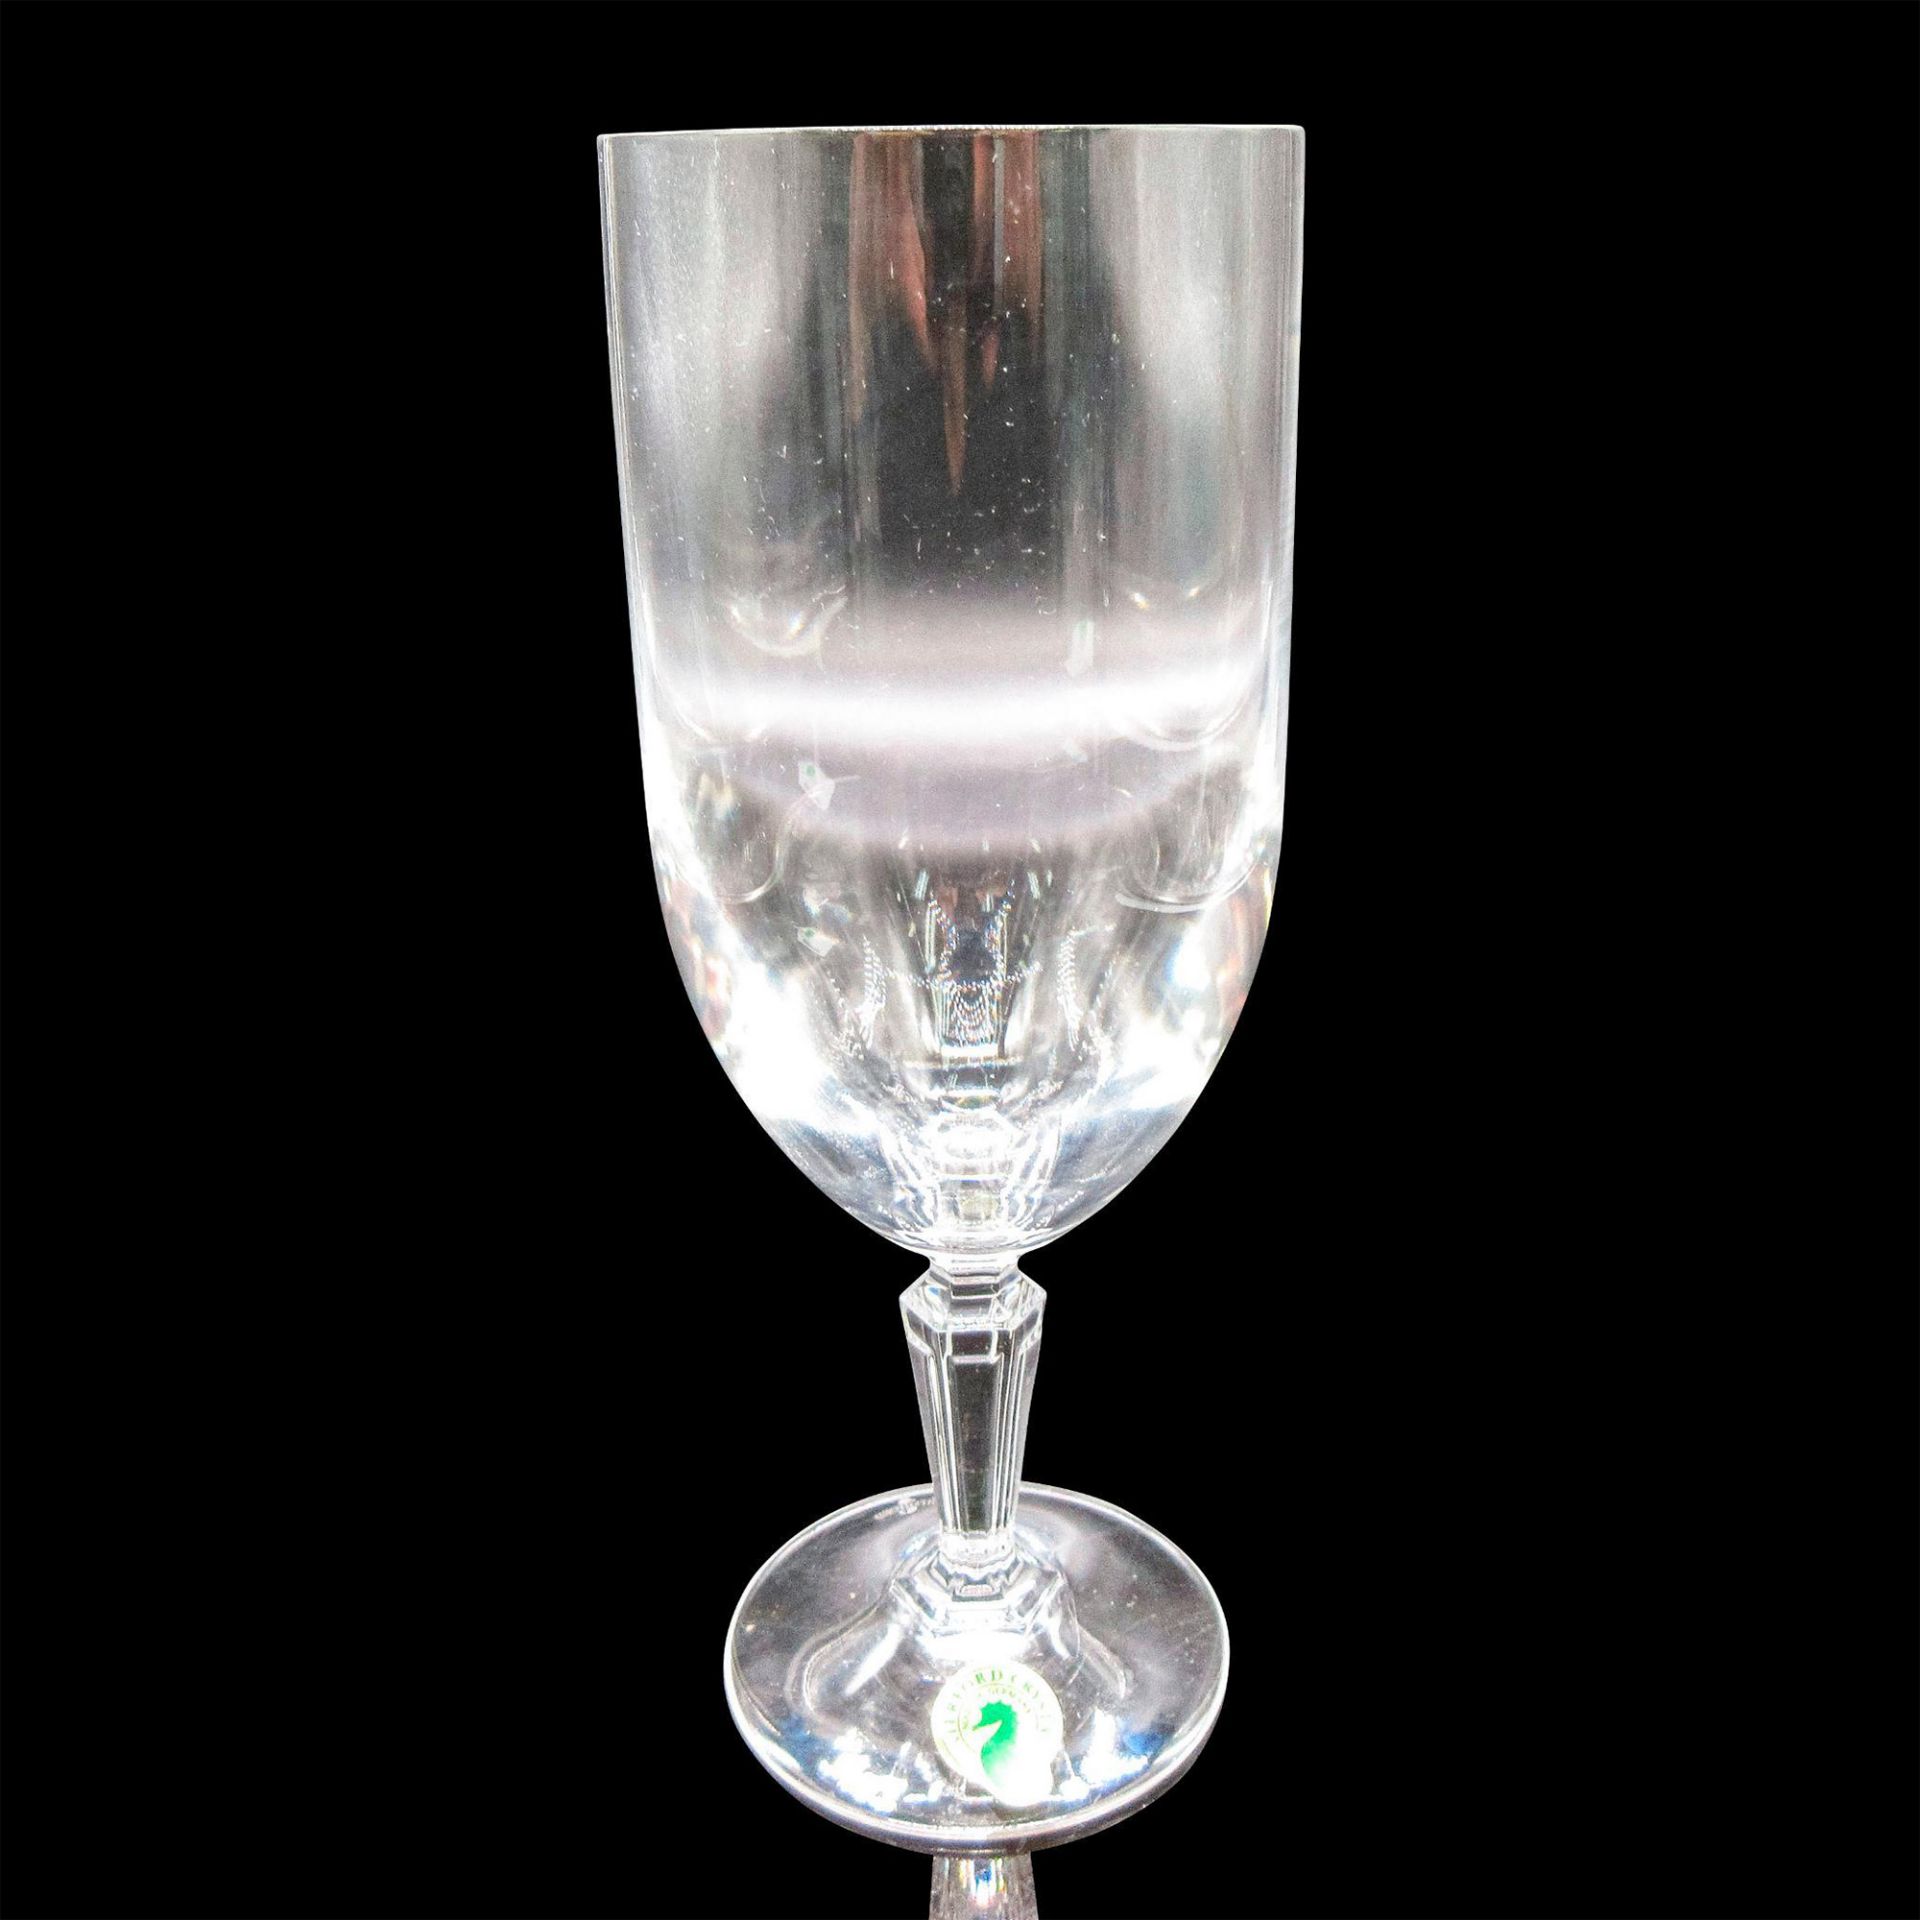 4pc Waterford Crystal Iced Tea Glasses, Metropolitan - Image 4 of 6